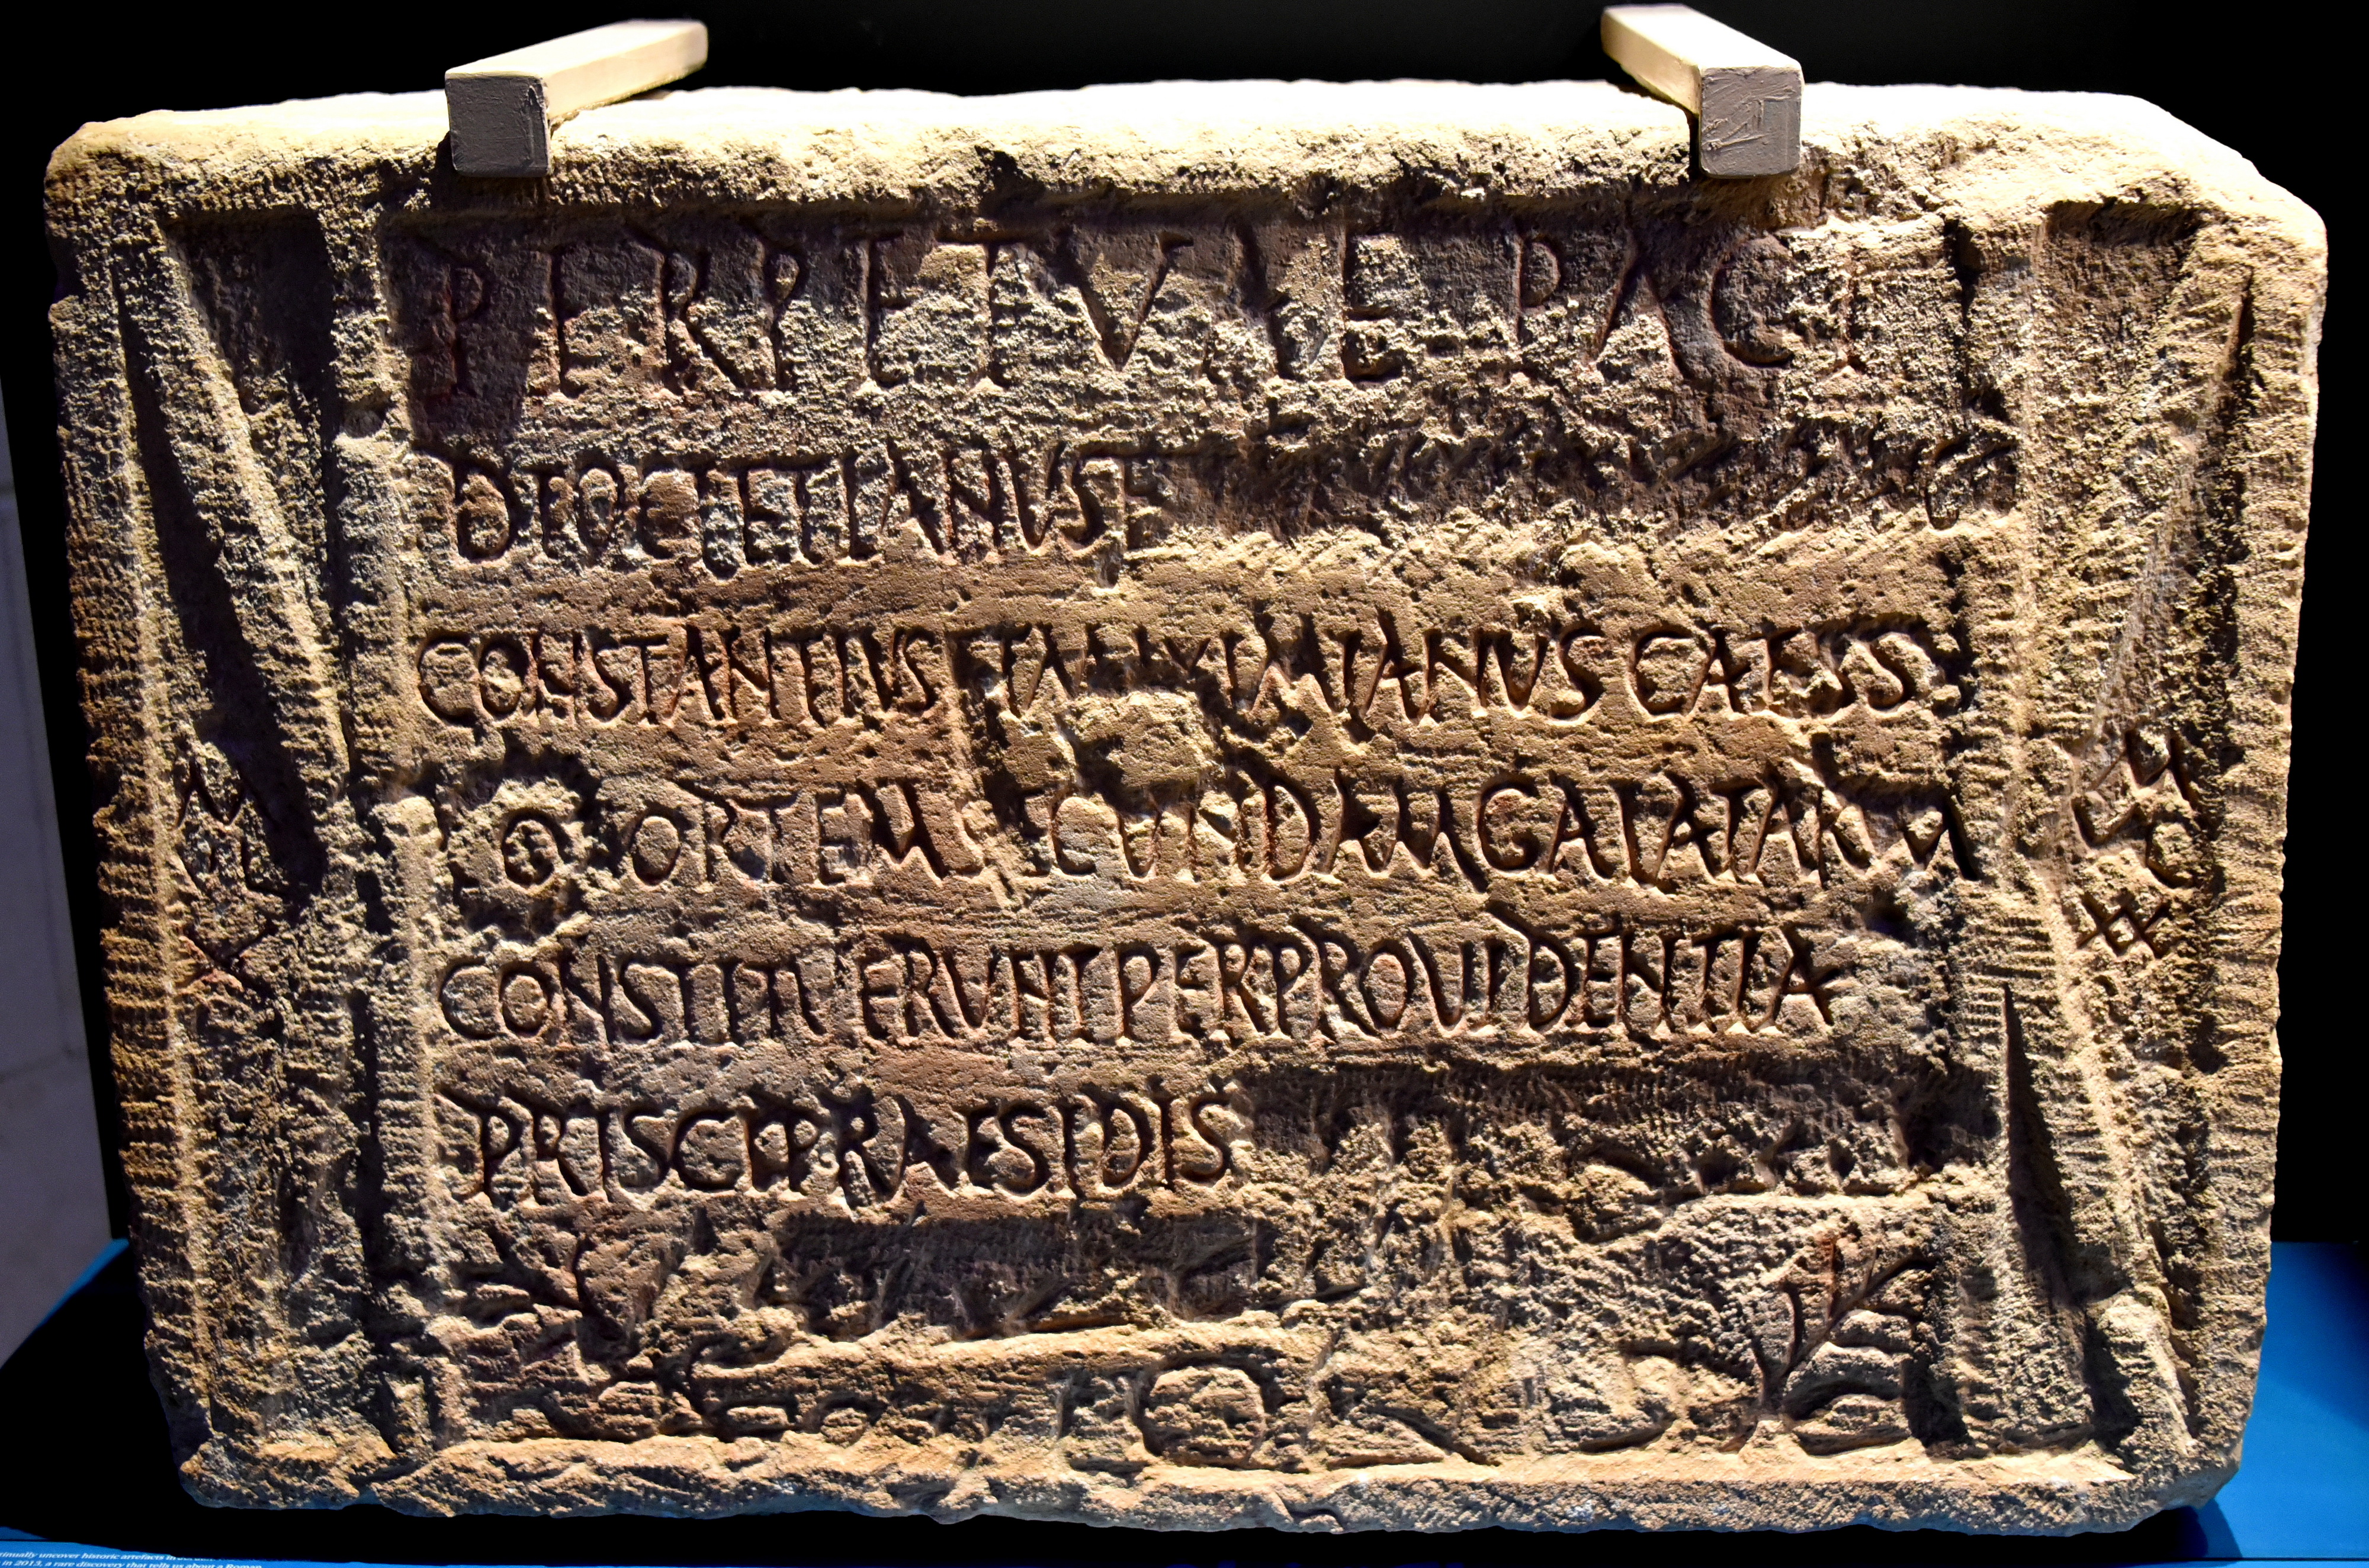 Latin Inscriptions